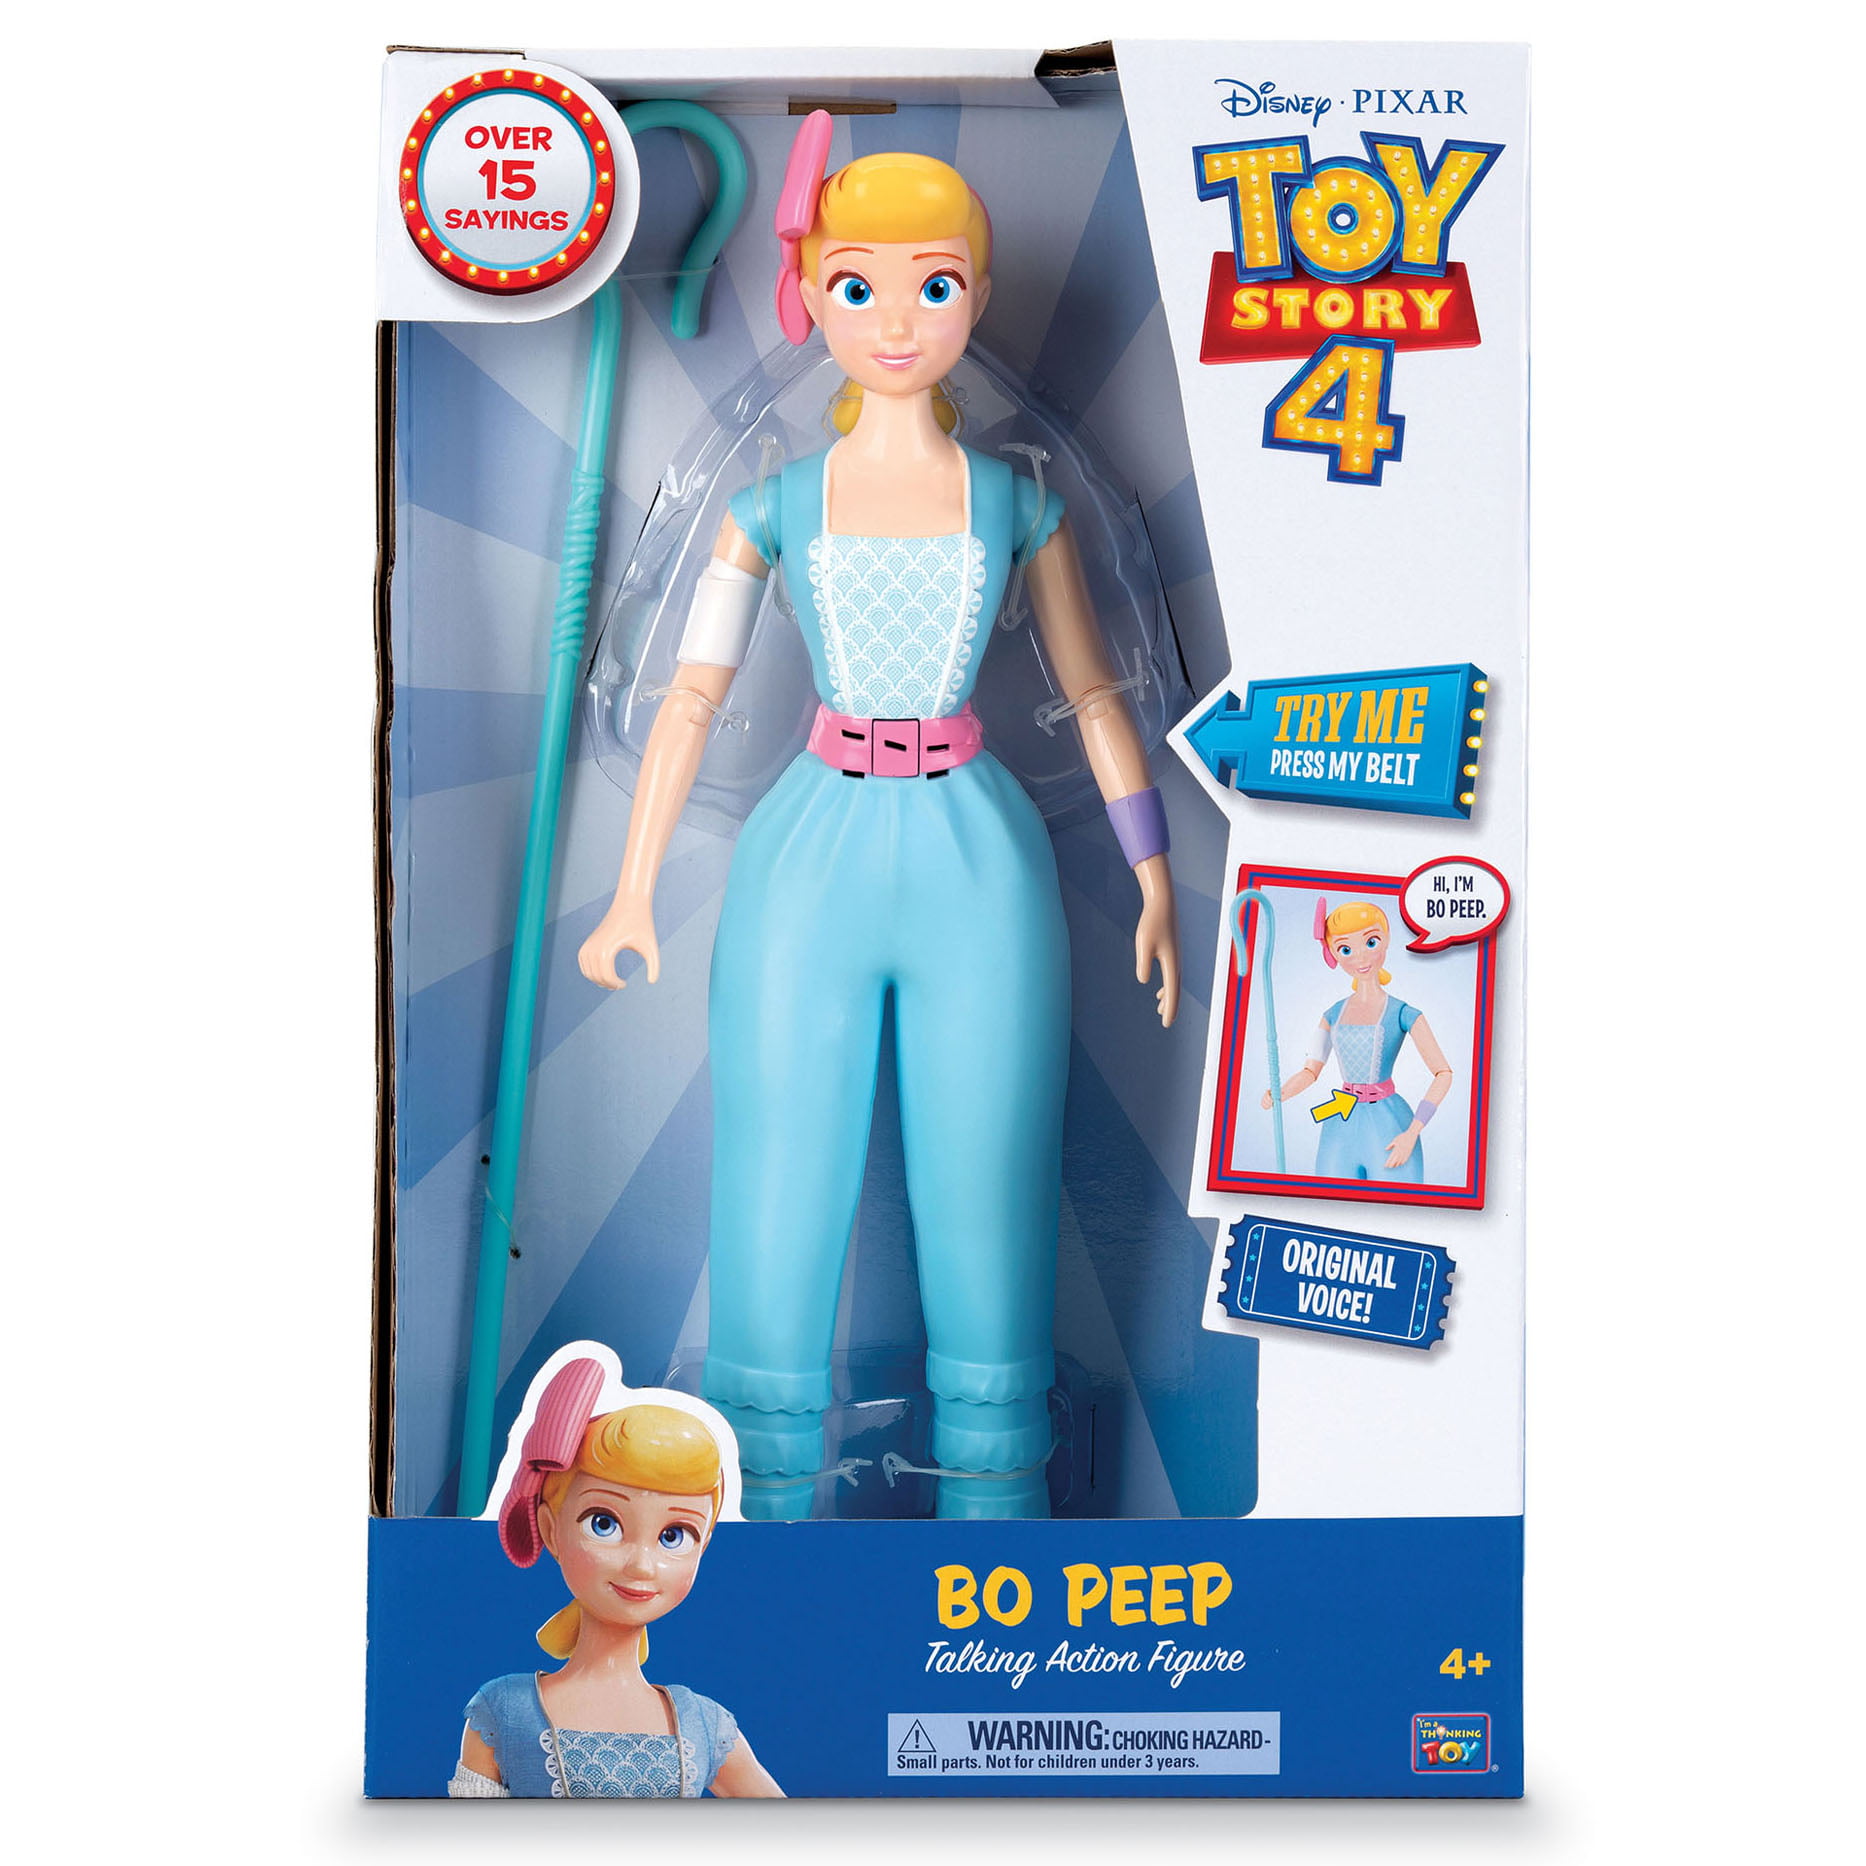 New Toy Story 4 Bo Peep 15” Talking Interactive Doll Disney Store 2019 Pixar 